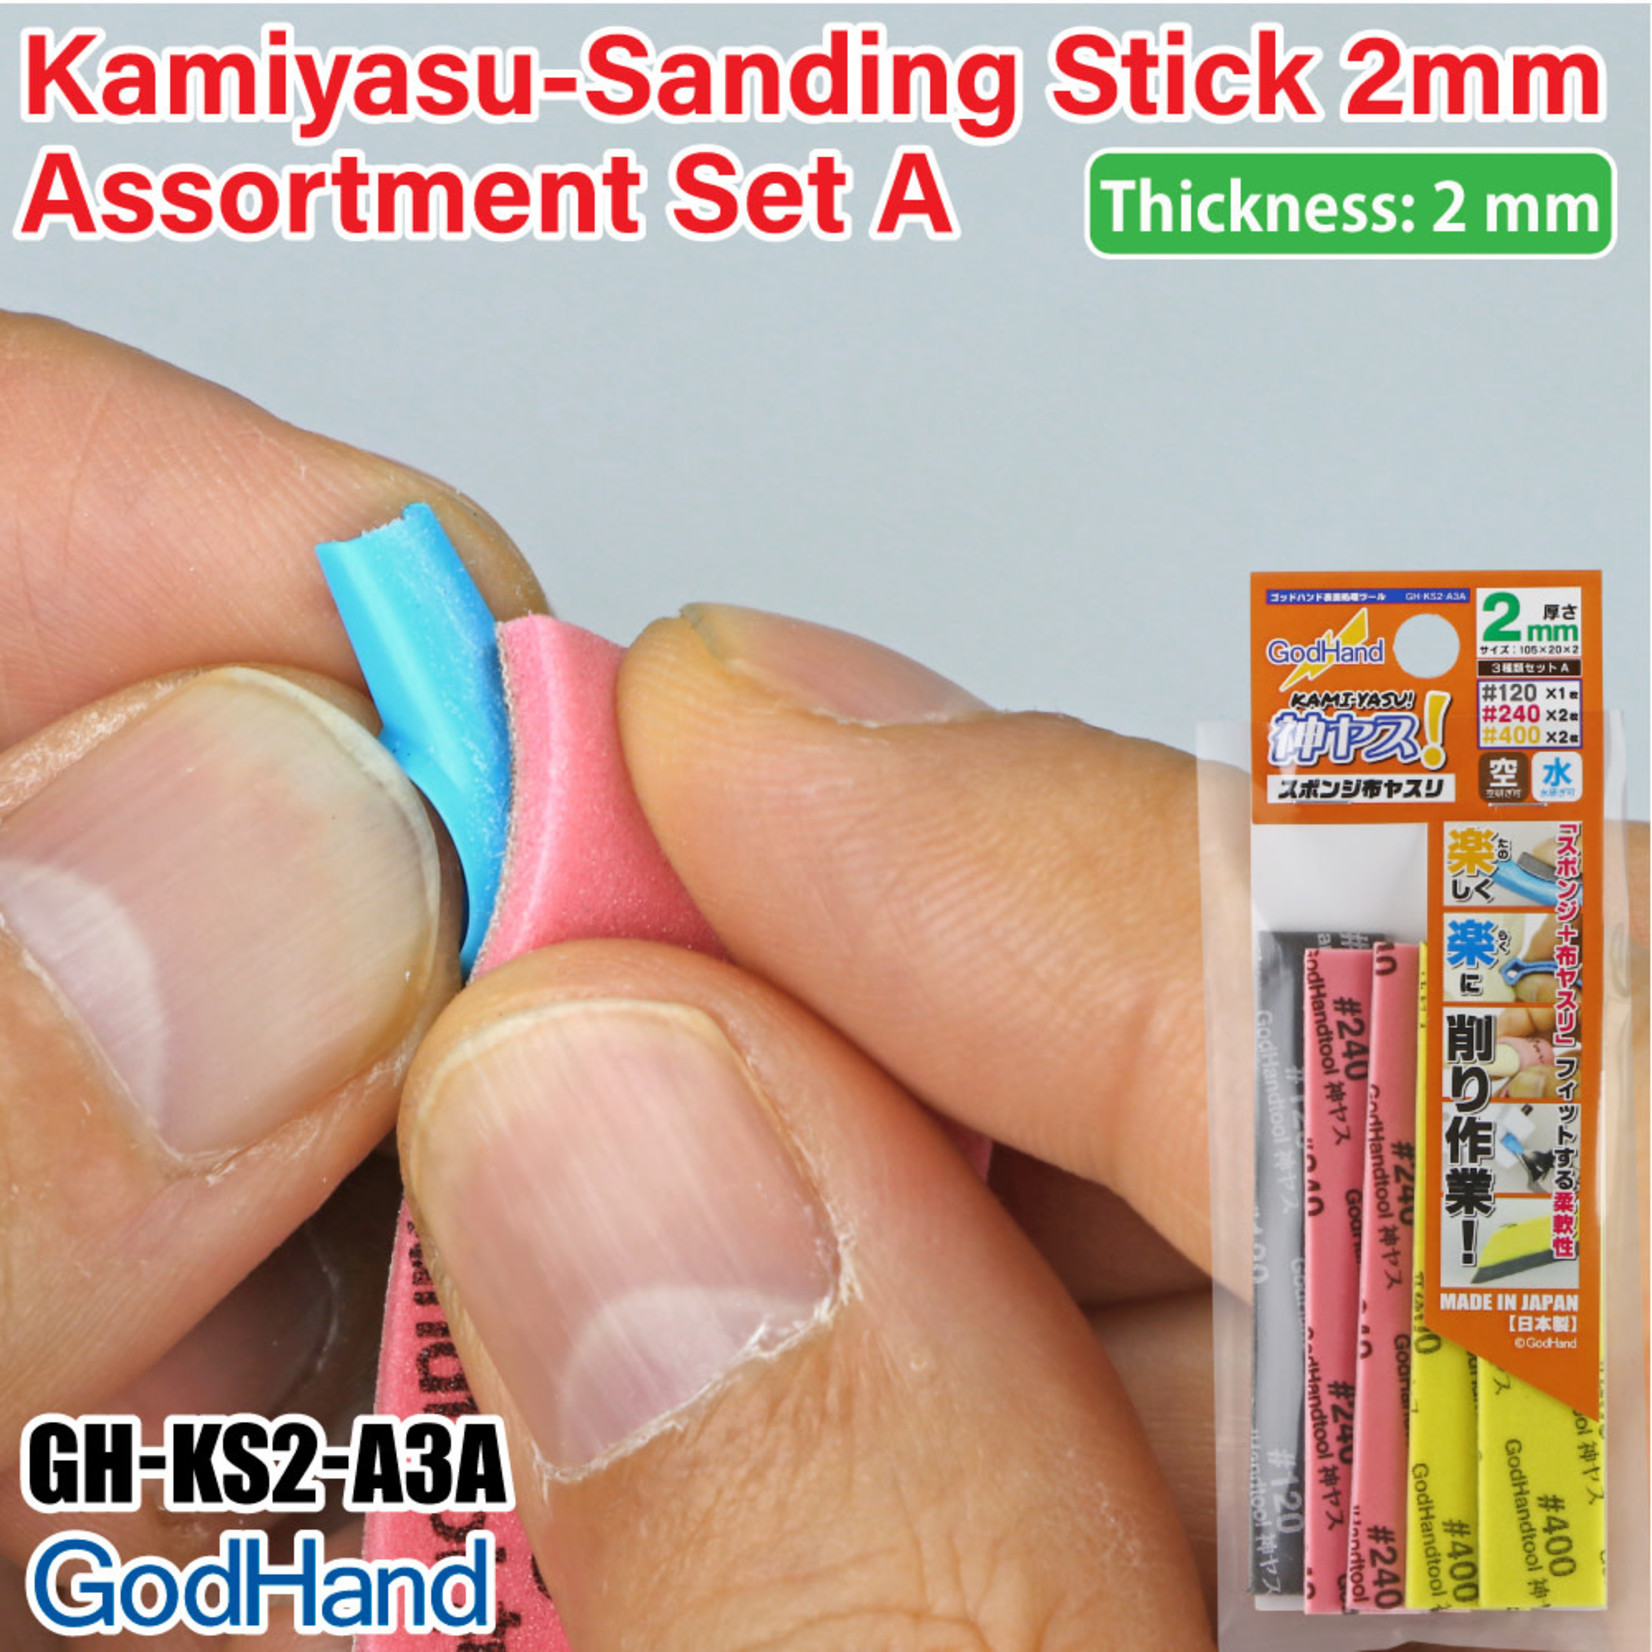 GodHand GodHand Kamiyasu Sanding Sponge Stick 2mm - Assortment (5) Set  A